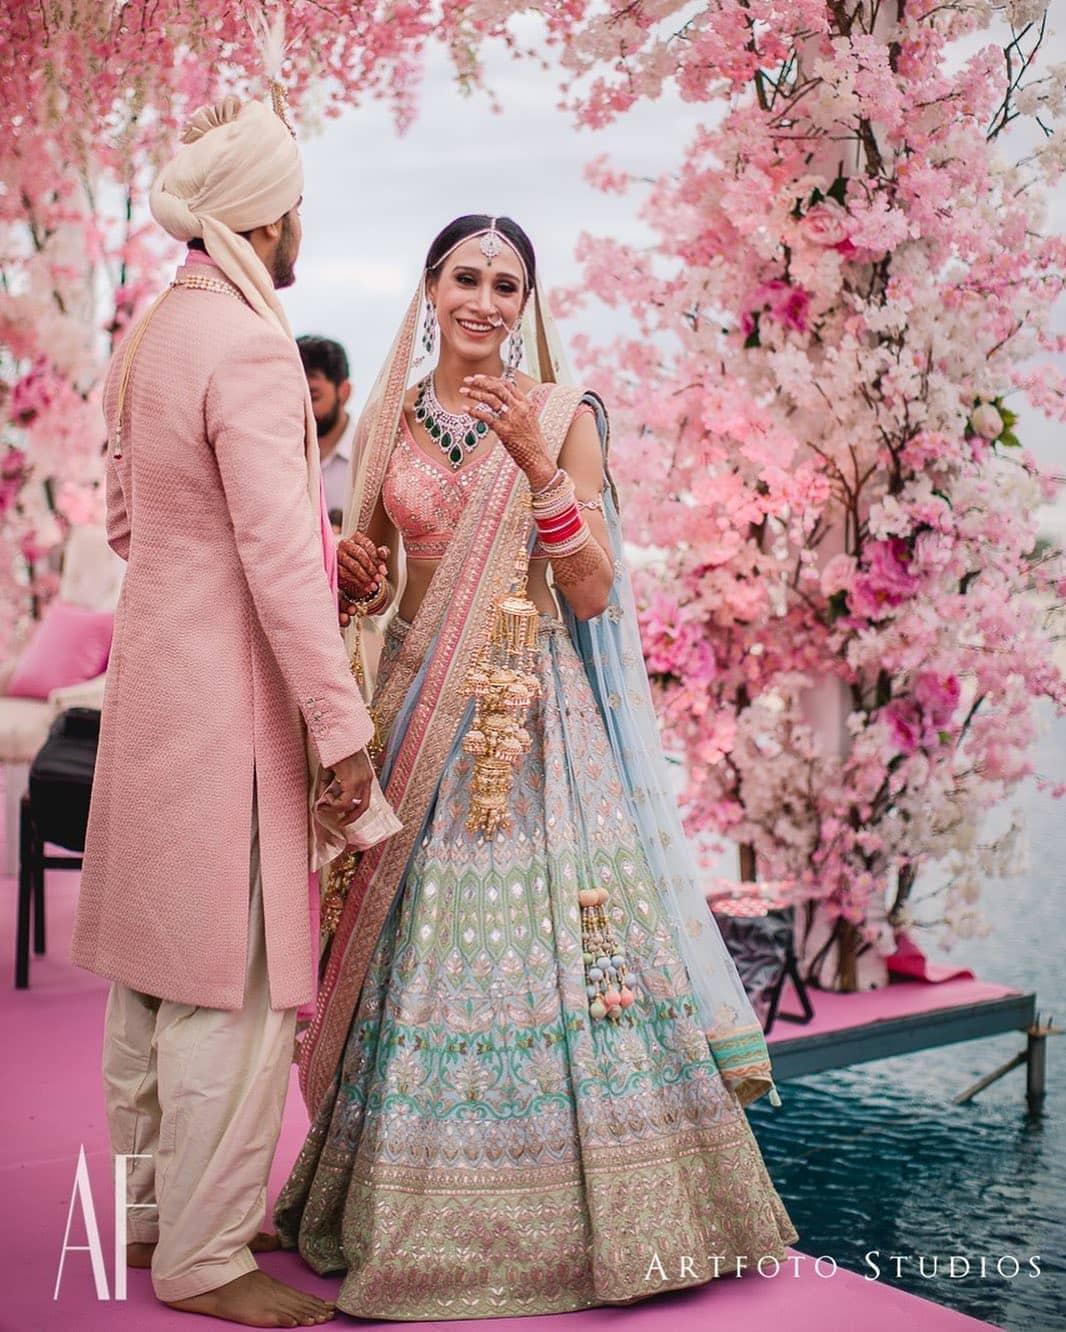 Pink Colour Dress | Indian | Combination | Pakistani | Design | Wedding |  Patterns | For Girls pink | Gaun pakistan, Gaun merah muda